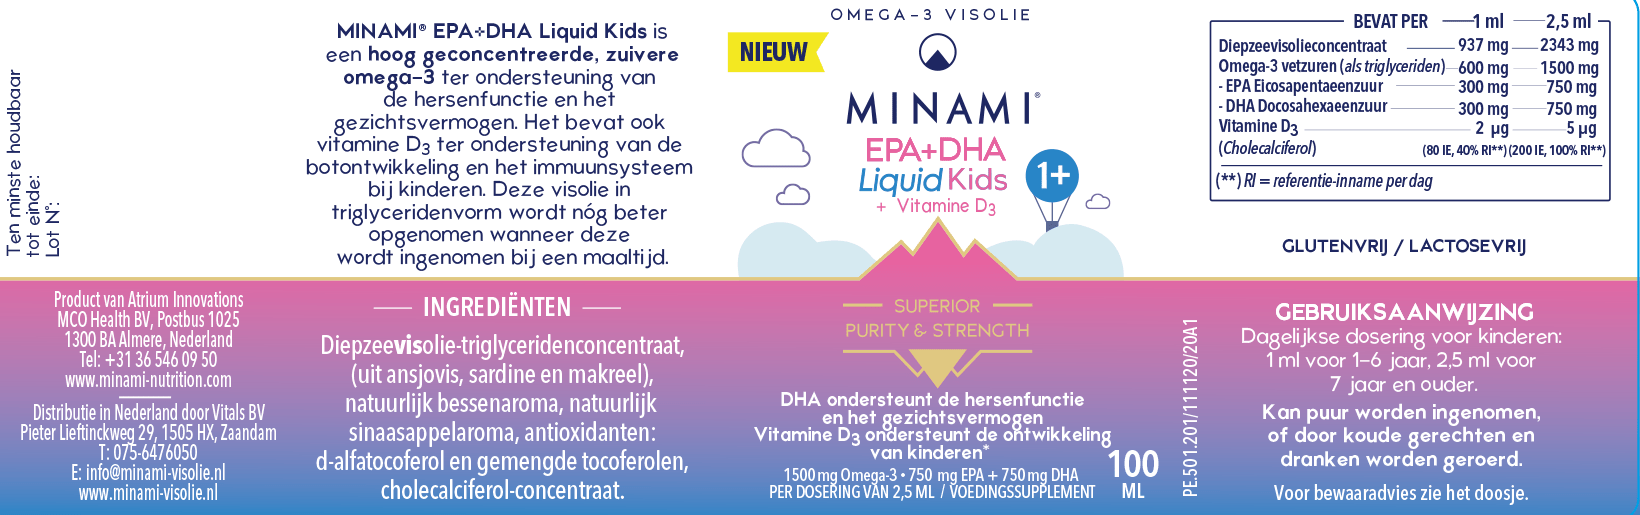 EPA & DHA liquid kids - NowVitamins - Minami - 8713975500469